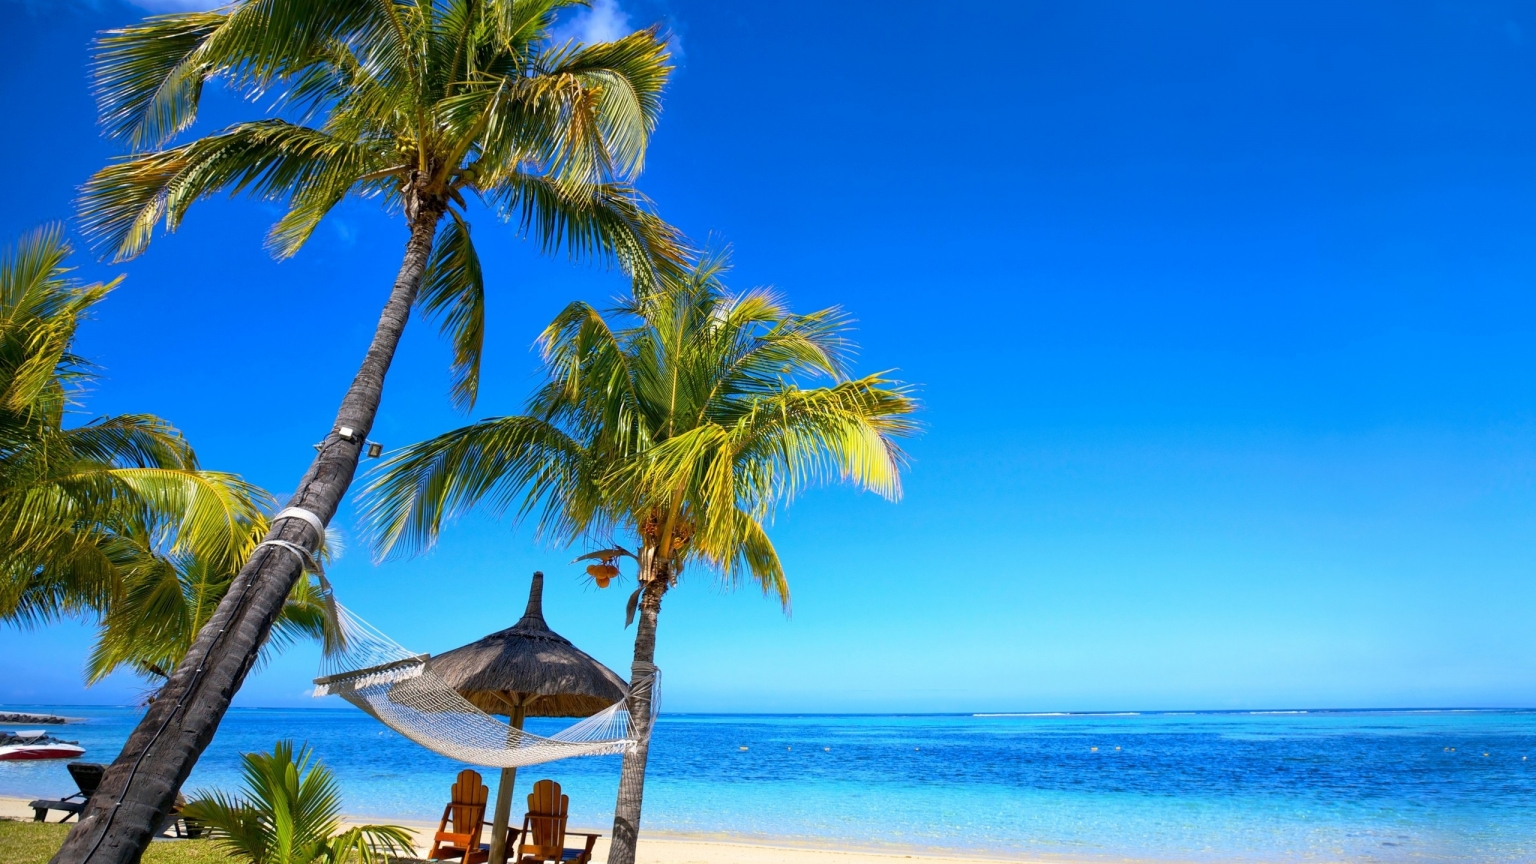 Paradise Palm Beach  for 1536 x 864 HDTV resolution